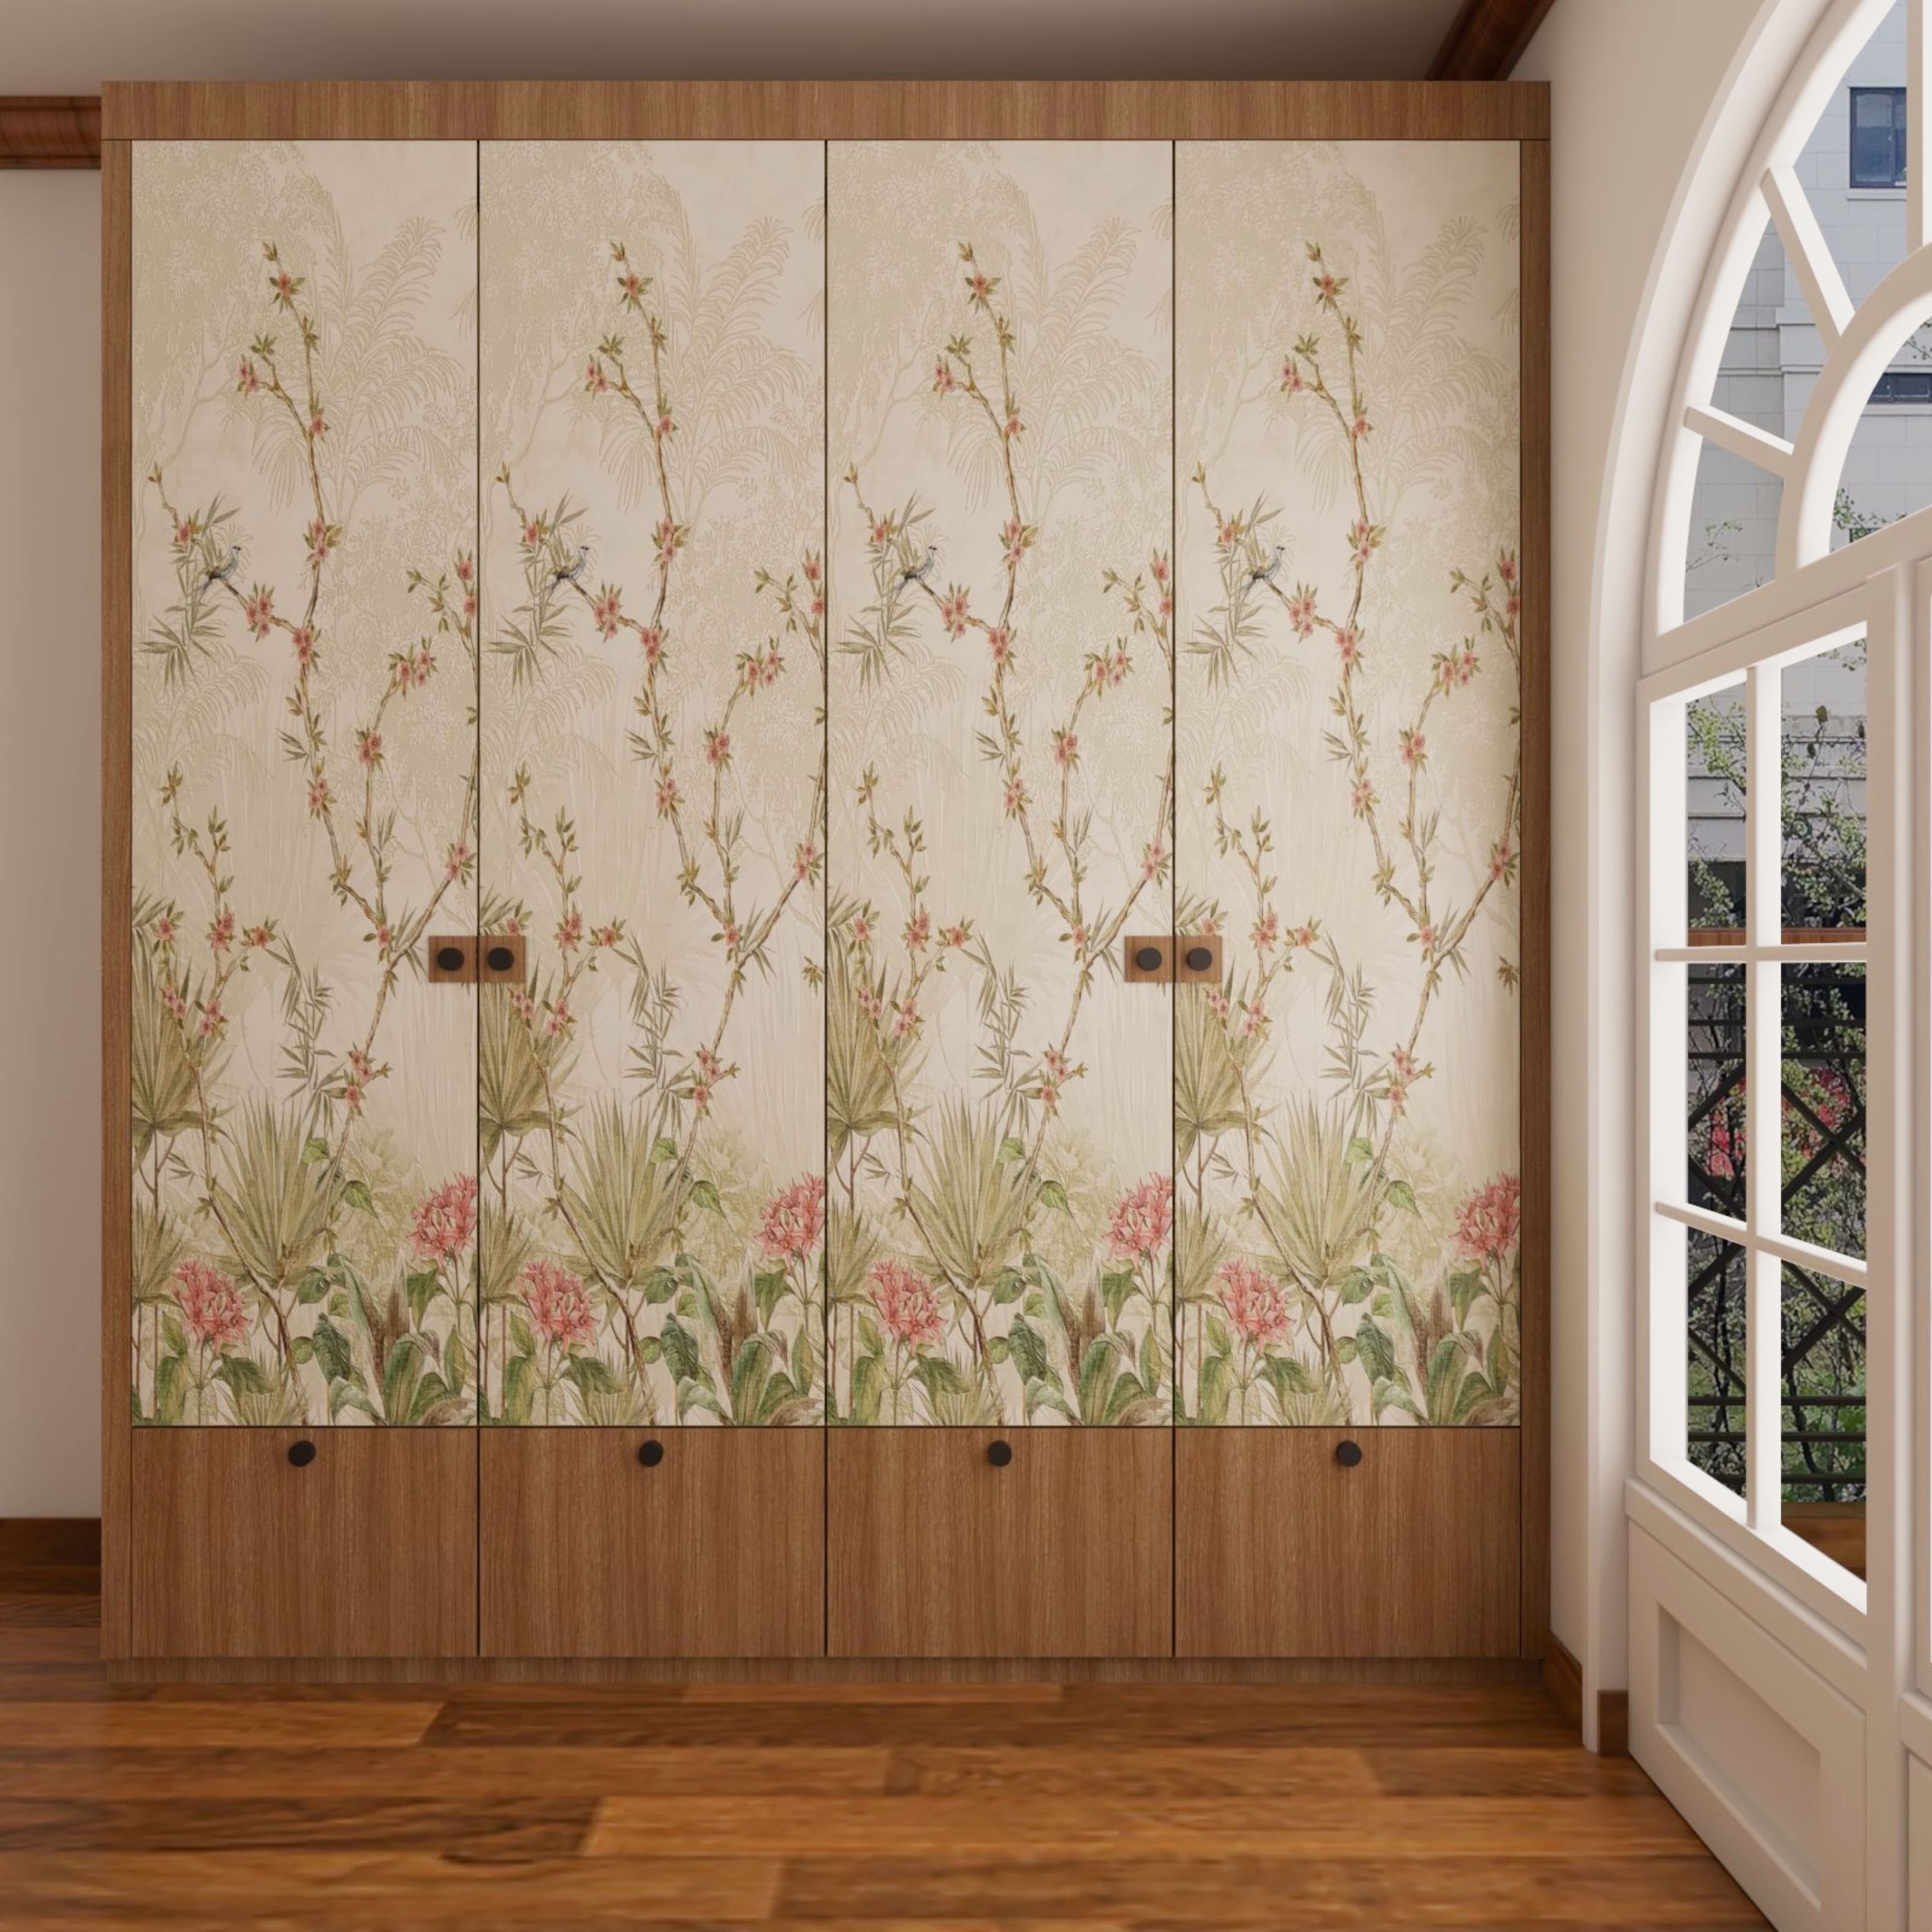 Mid-Century Modern 4-Door Wooden Swing Wardrobe With Floral Wallpaper Panels